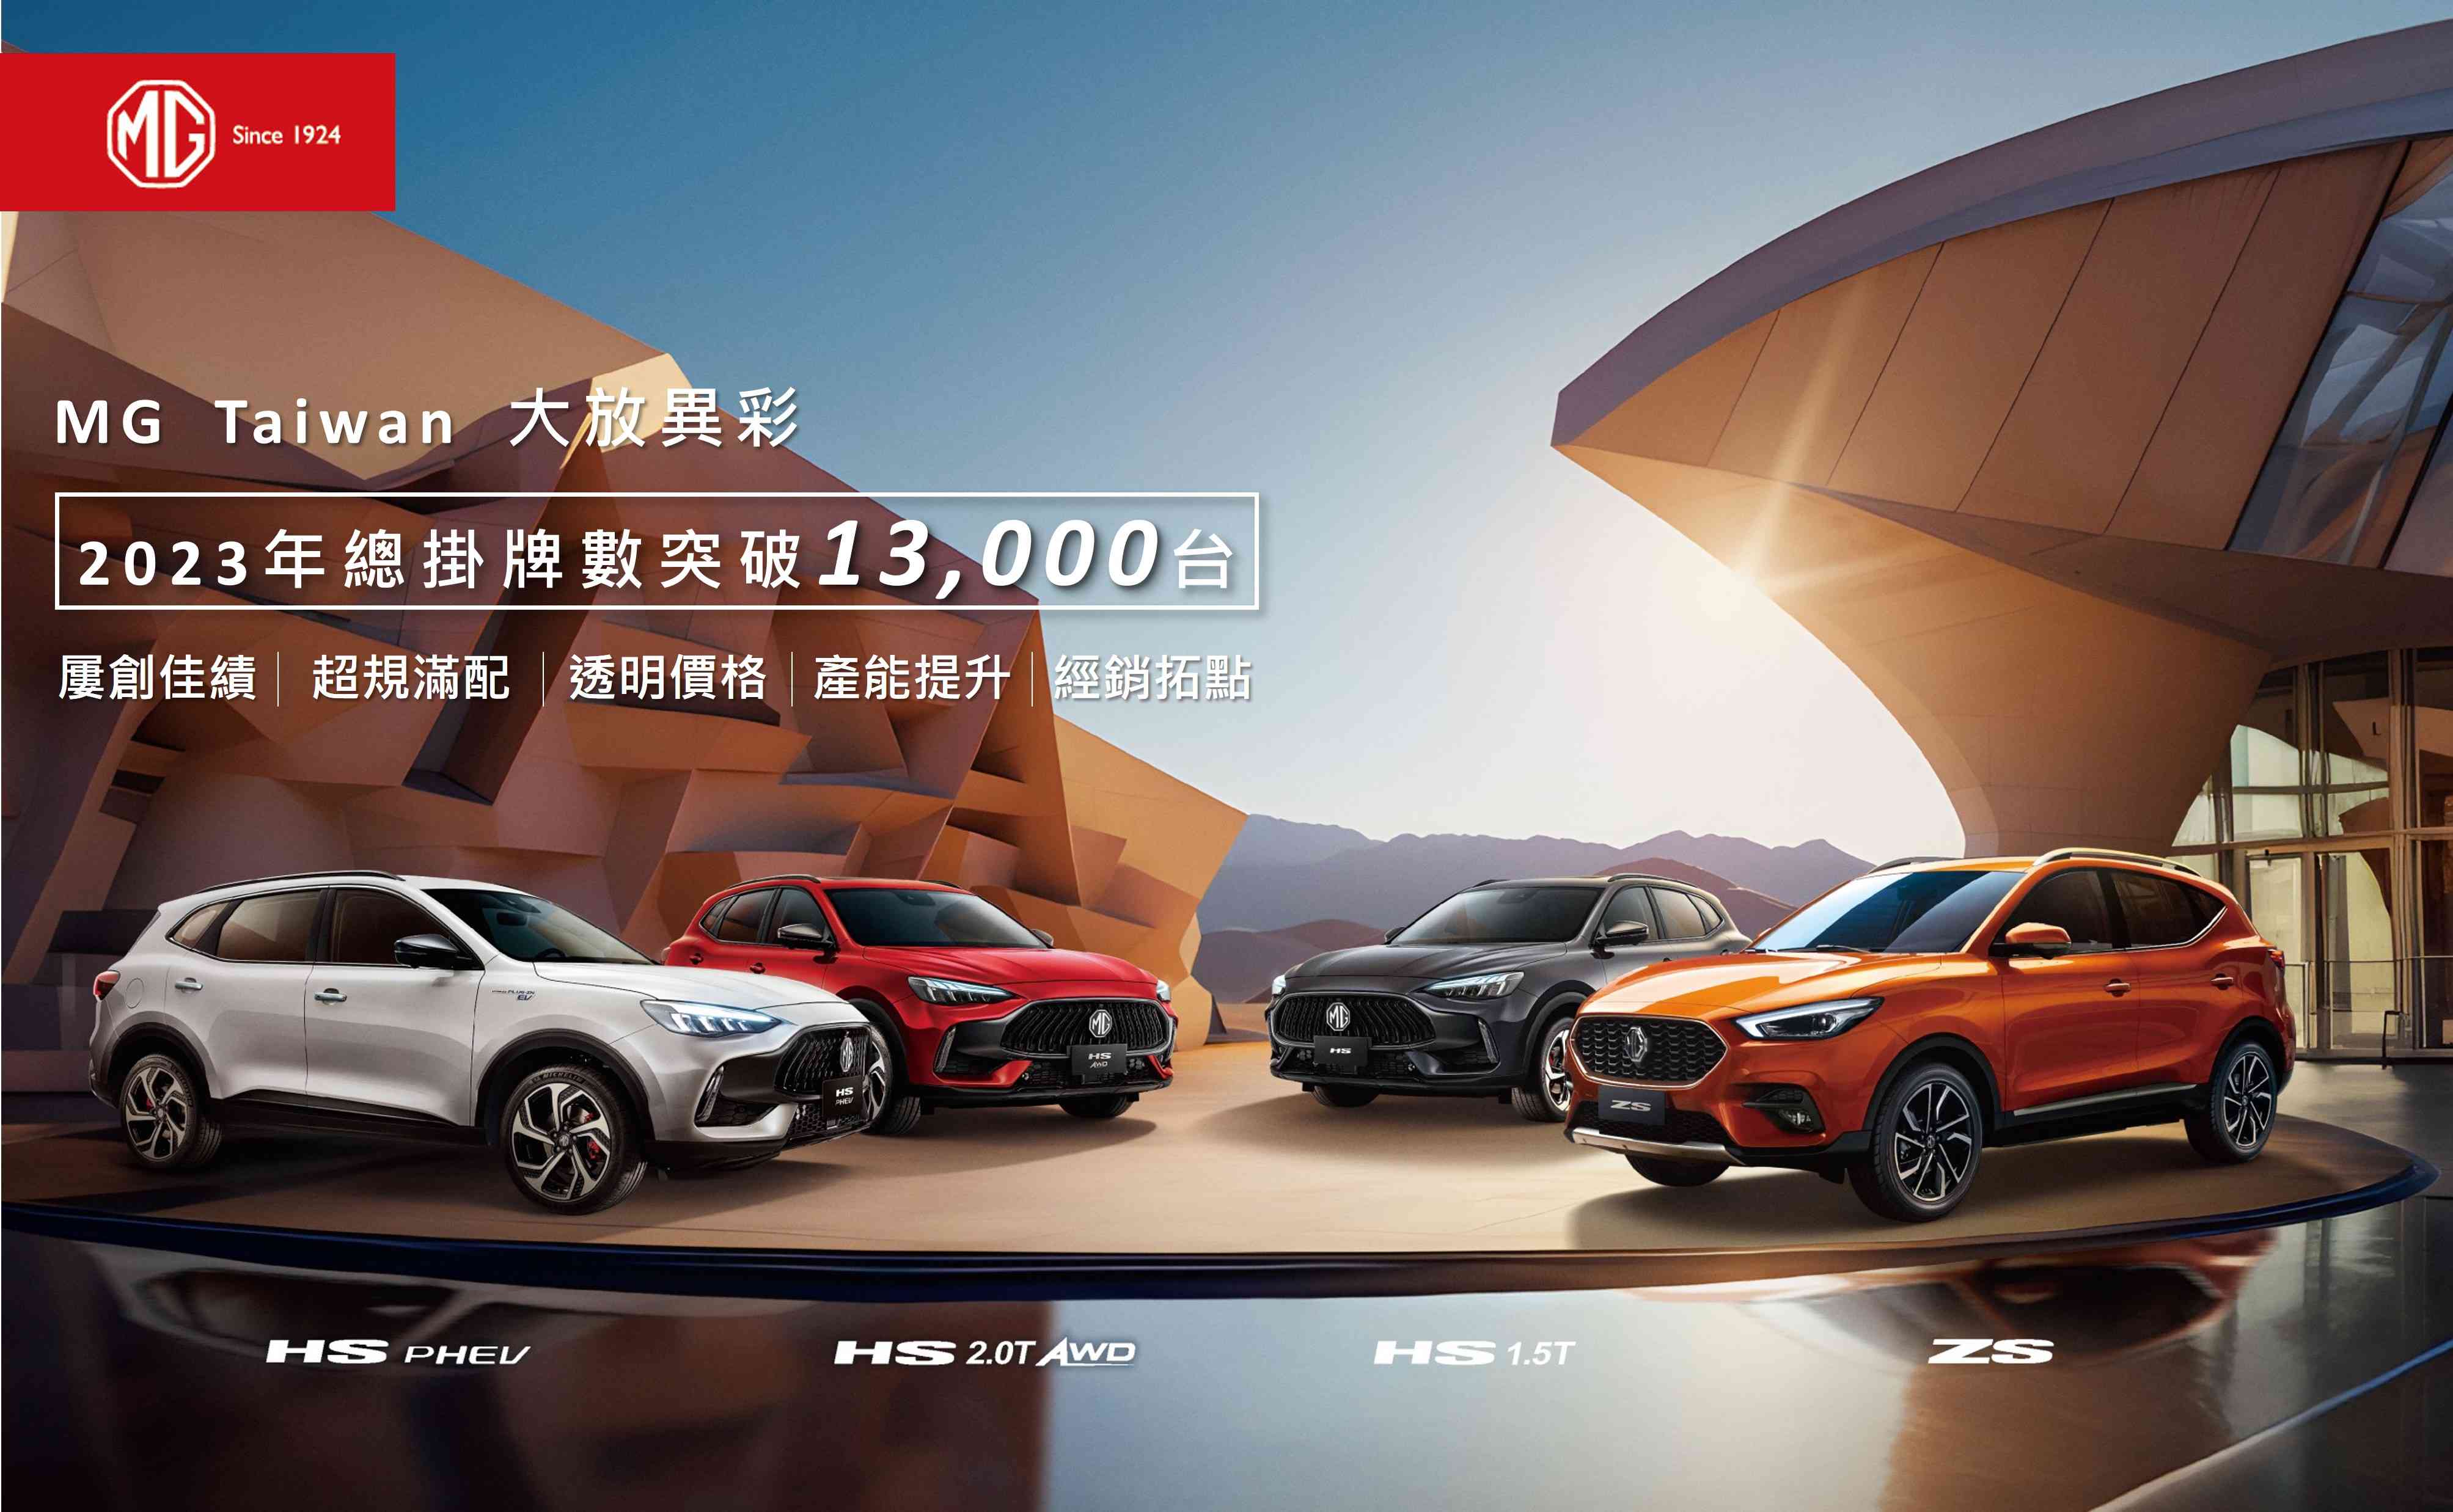 MG Taiwan 2023年大放異彩 締造年銷突破1.3萬台歷史新猷2023年Q4同期掛牌成長逾三倍  展現「超規滿配」產品實力